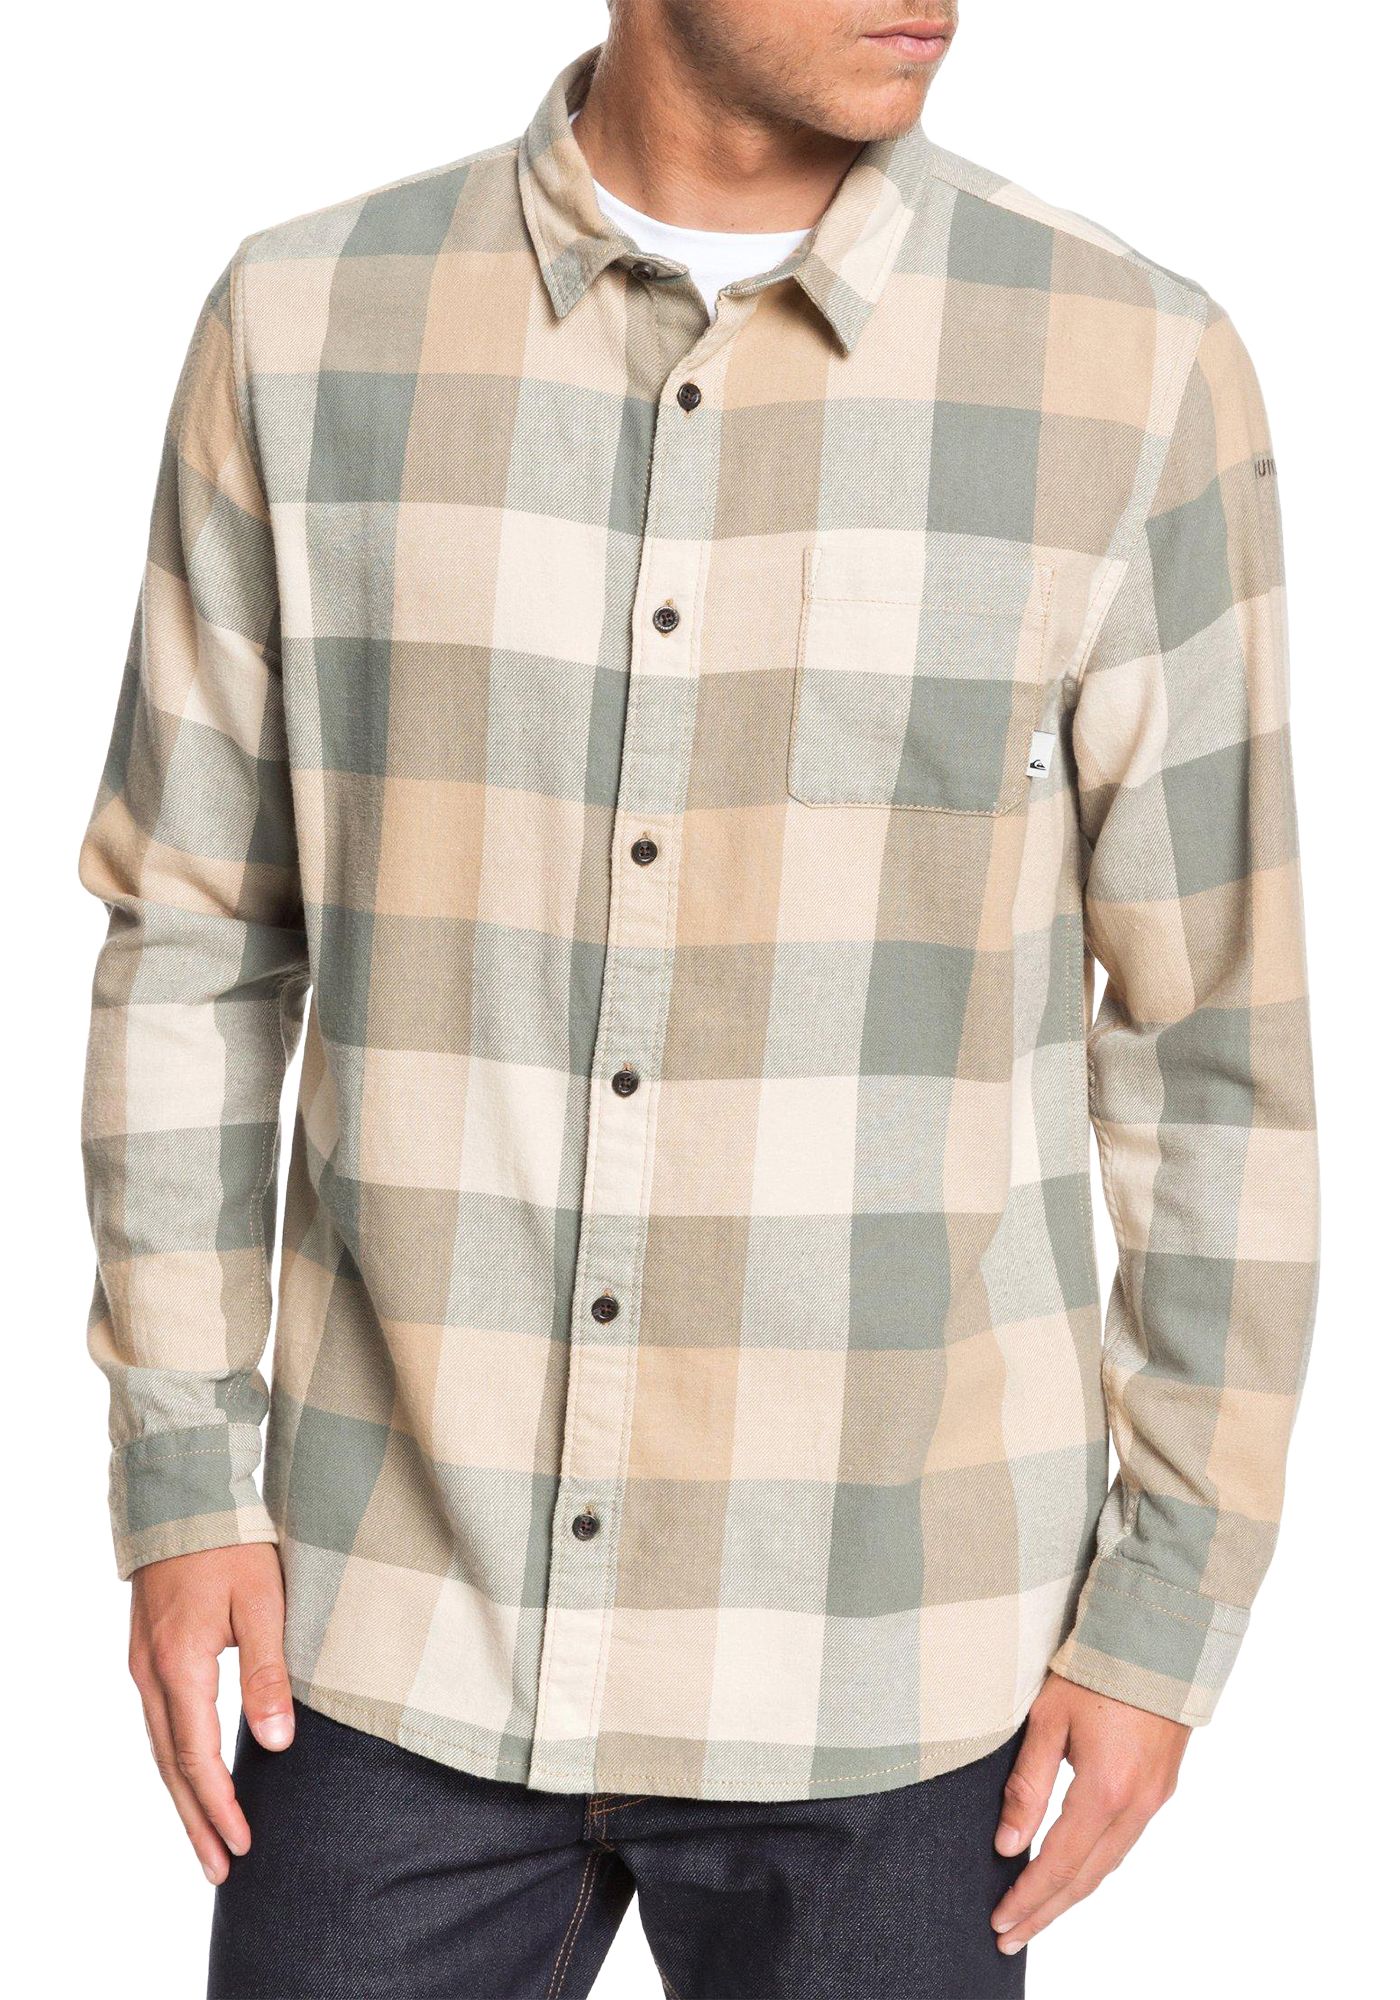  Quiksilver  Men s Motherly Flannel Long Sleeve Shirt  DICK 